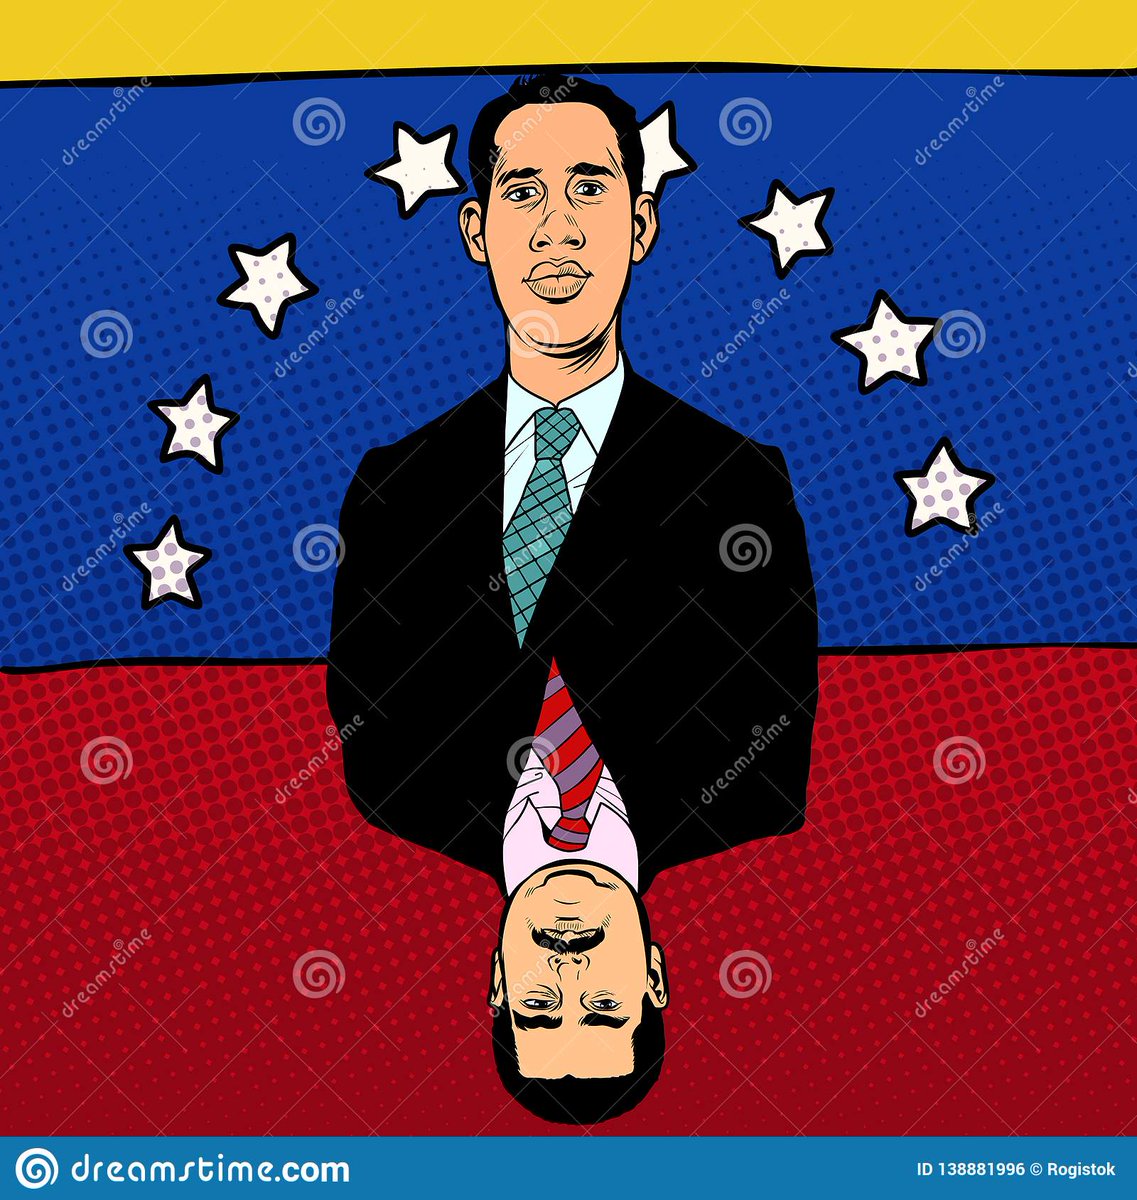 #realDonaldTrump 
#MaduroGenocide
#MUDsocialist 
#TrumpHelpUS